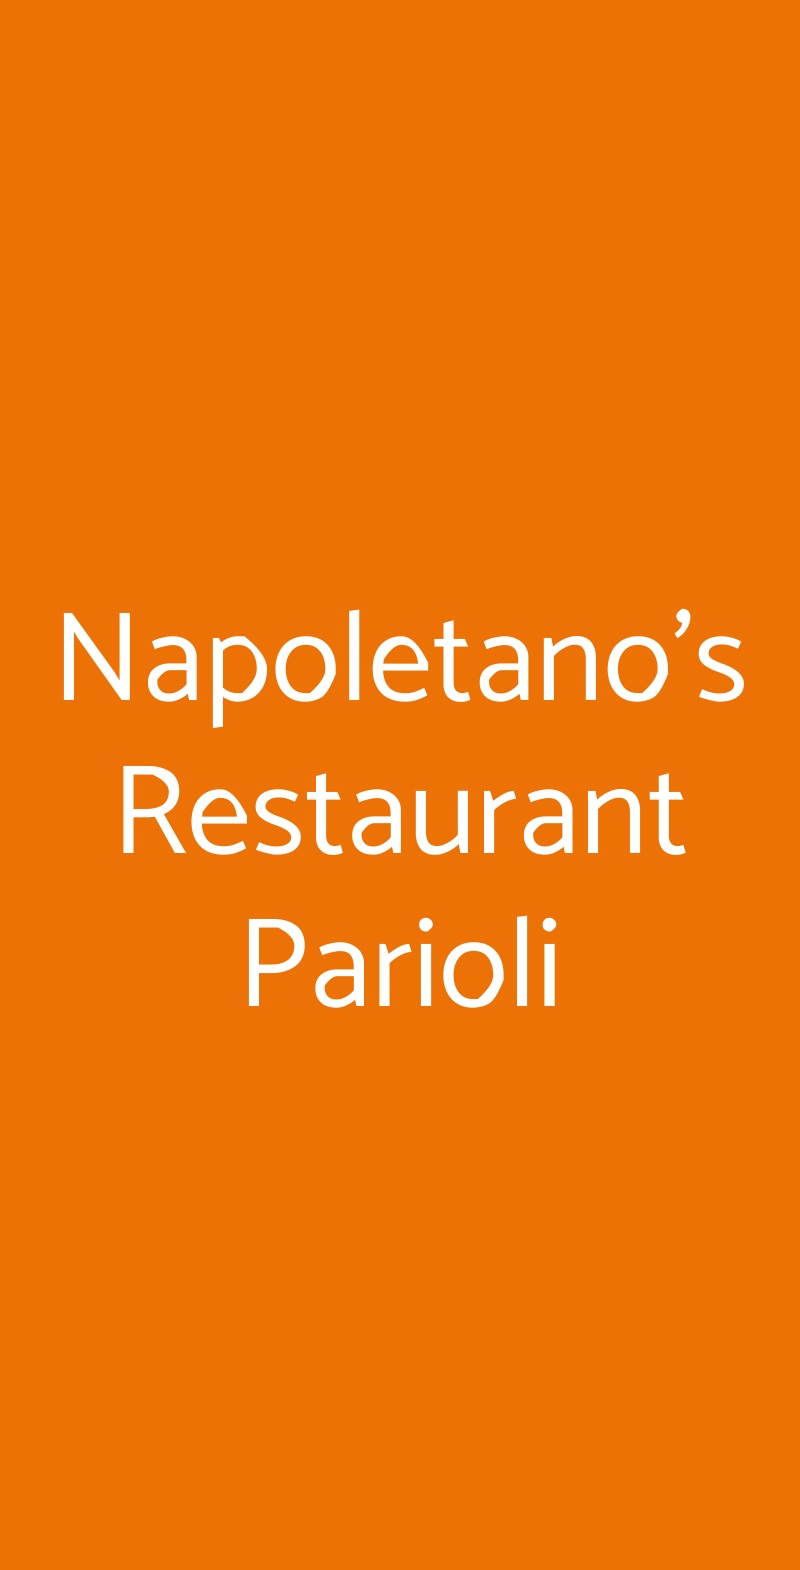 Napoletano's Restaurant Parioli Roma menù 1 pagina